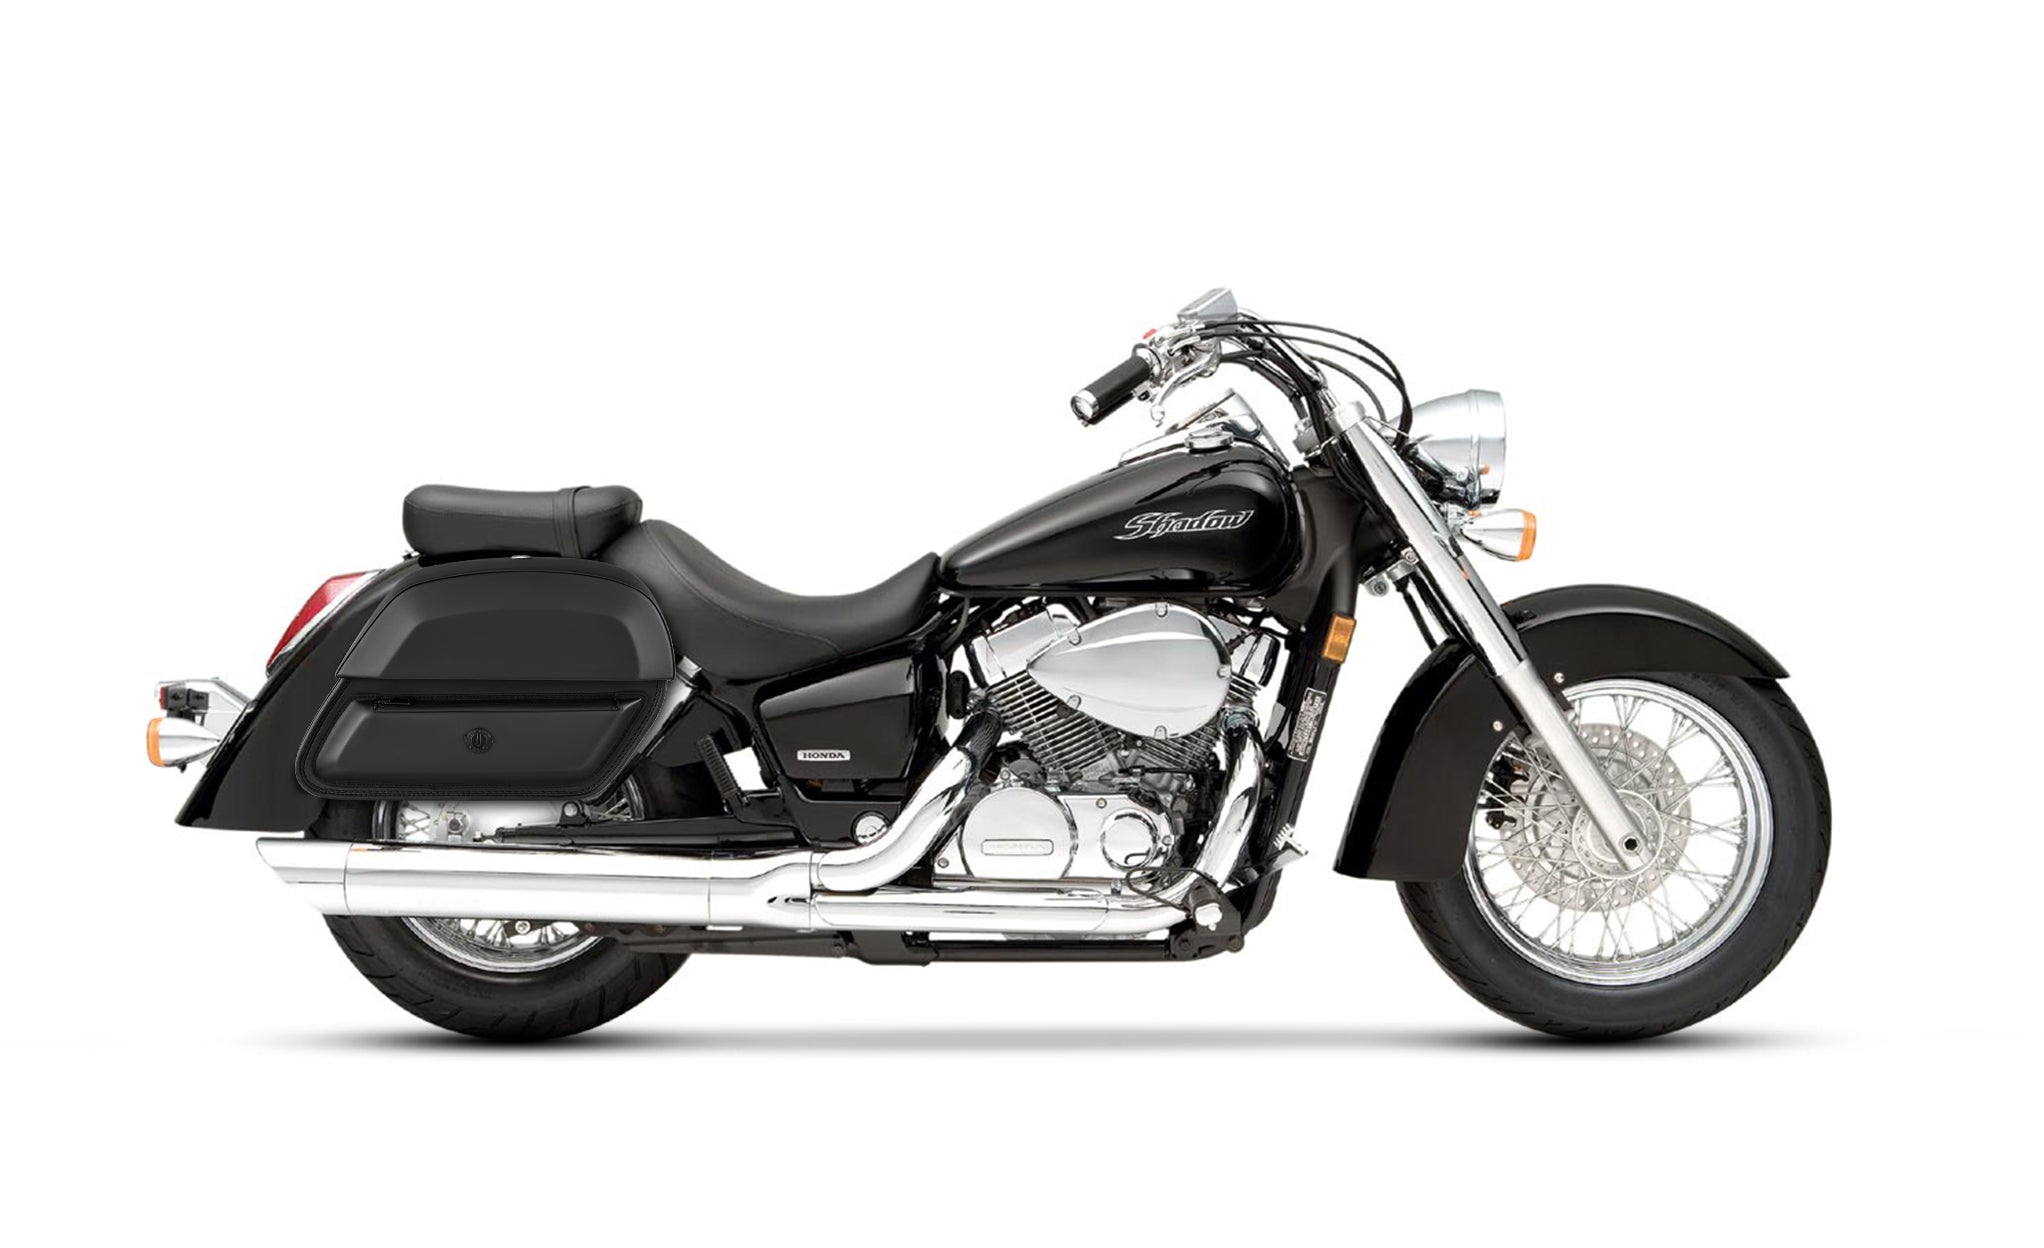 28L - Wraith Medium Shadow 750 Aero Leather Motorcycle Saddlebags BAG on Bike View @expand